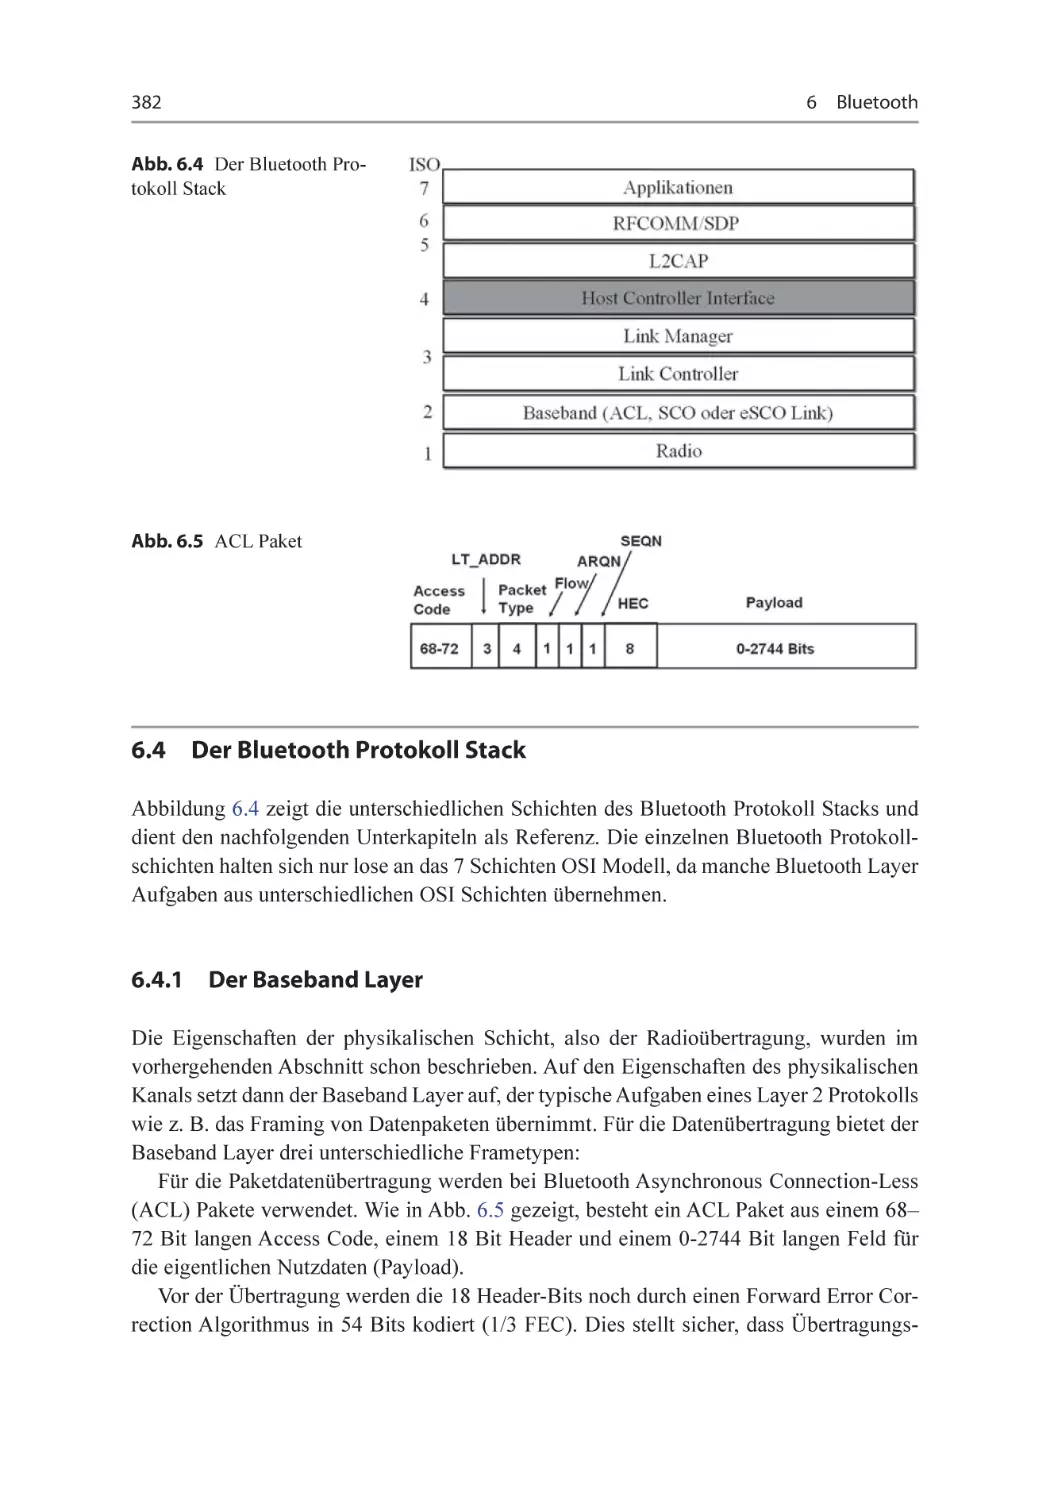 6.4 Der Bluetooth Protokoll Stack
6.4.1 Der Baseband Layer